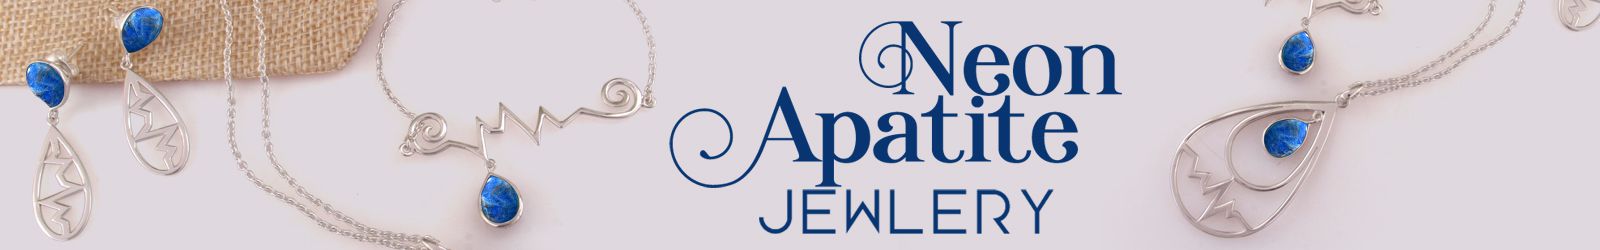 Silver Neon Apatite Jewelry Wholesale Supplier